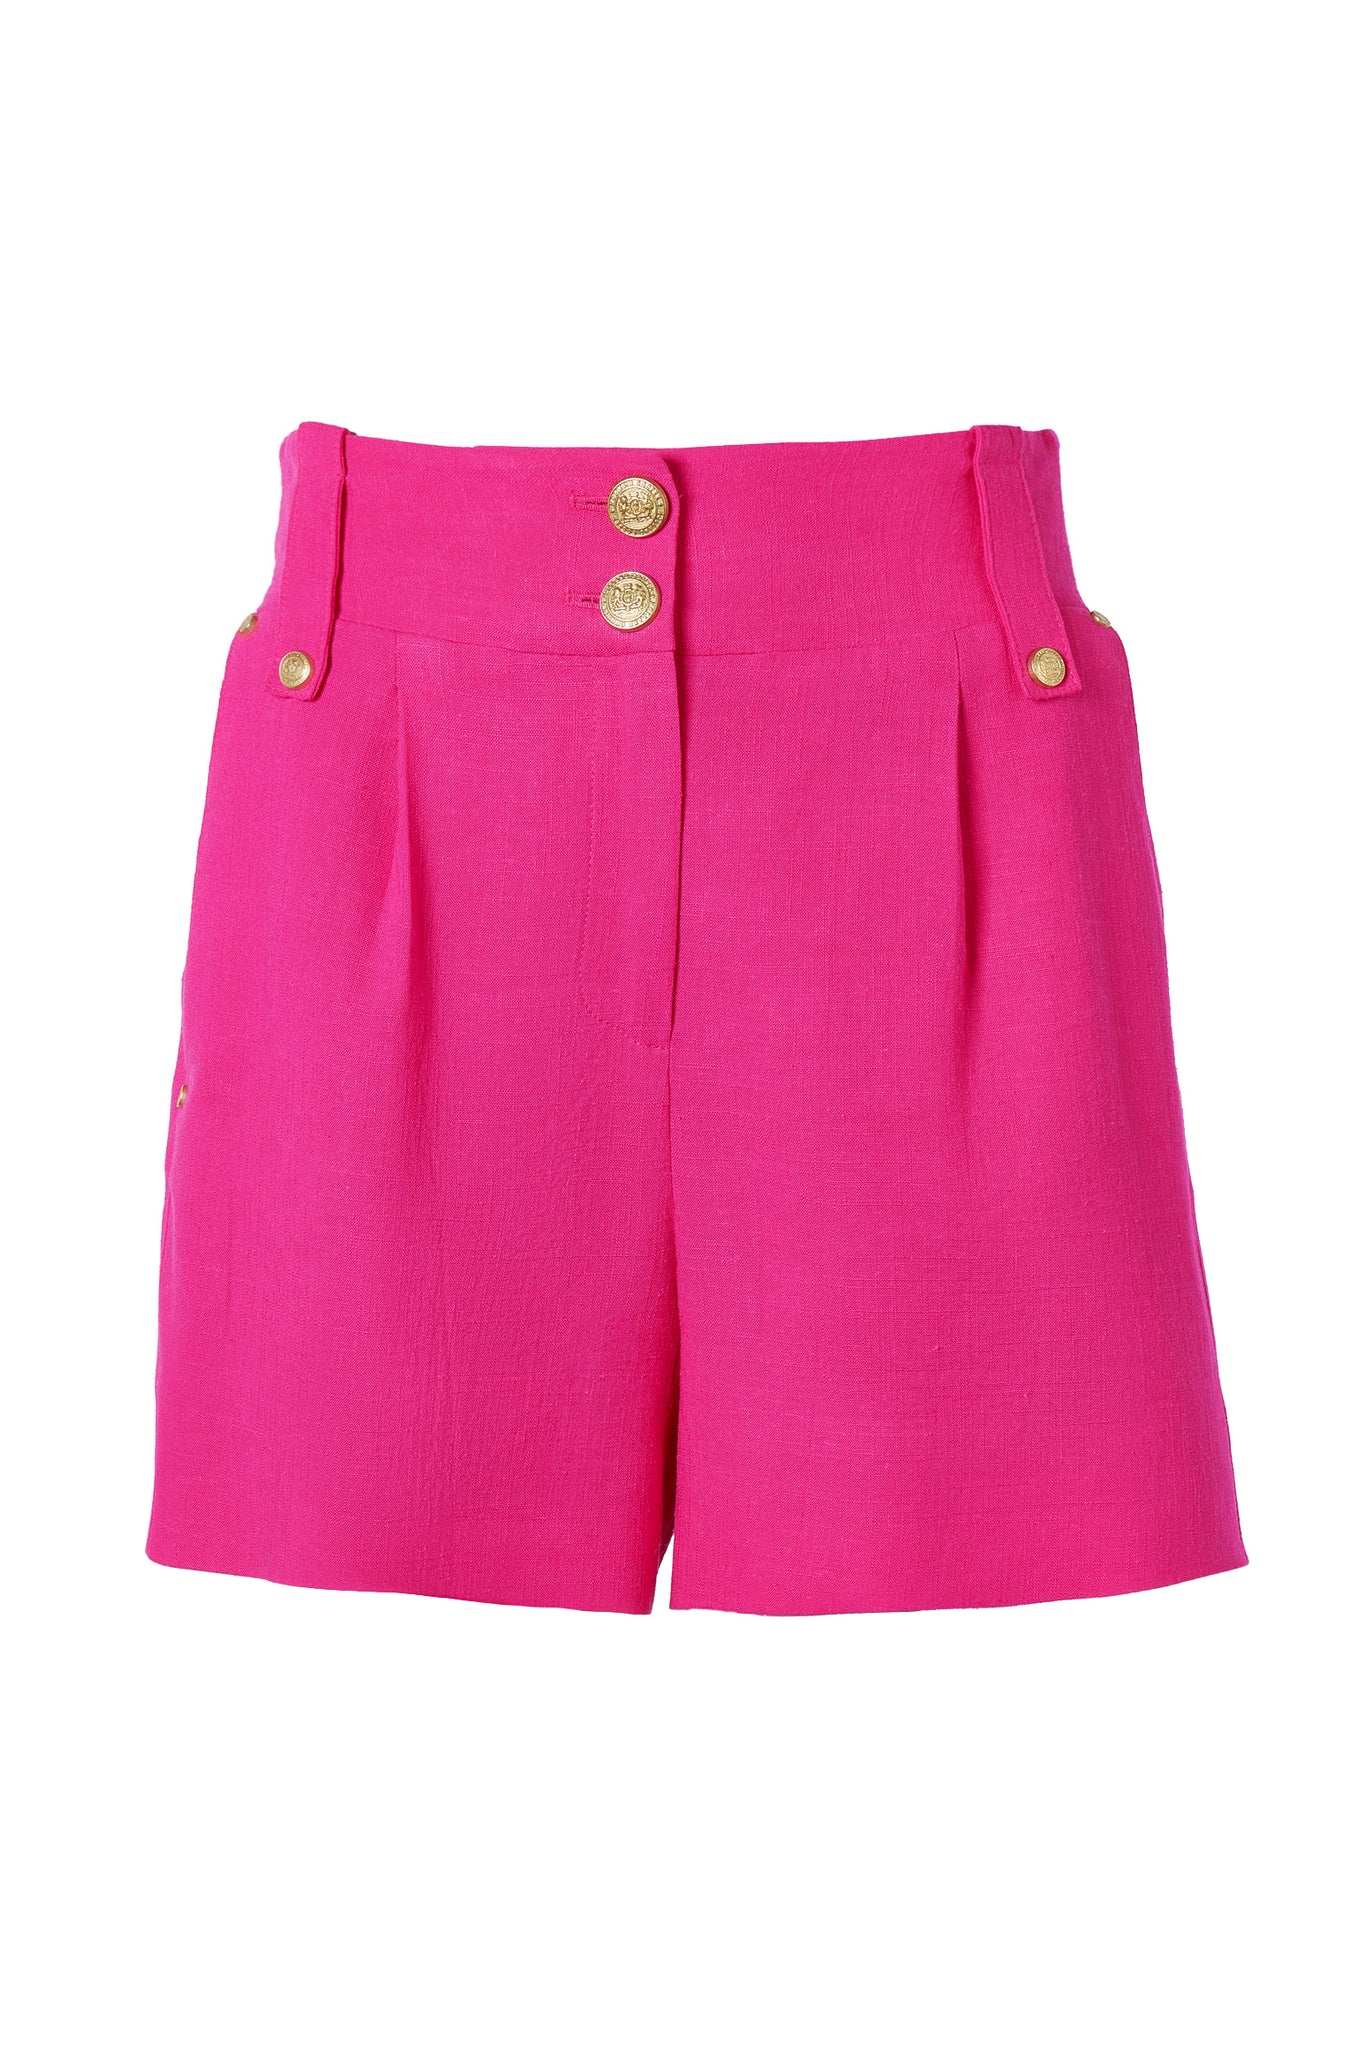 The Hot Pink Linen Suit